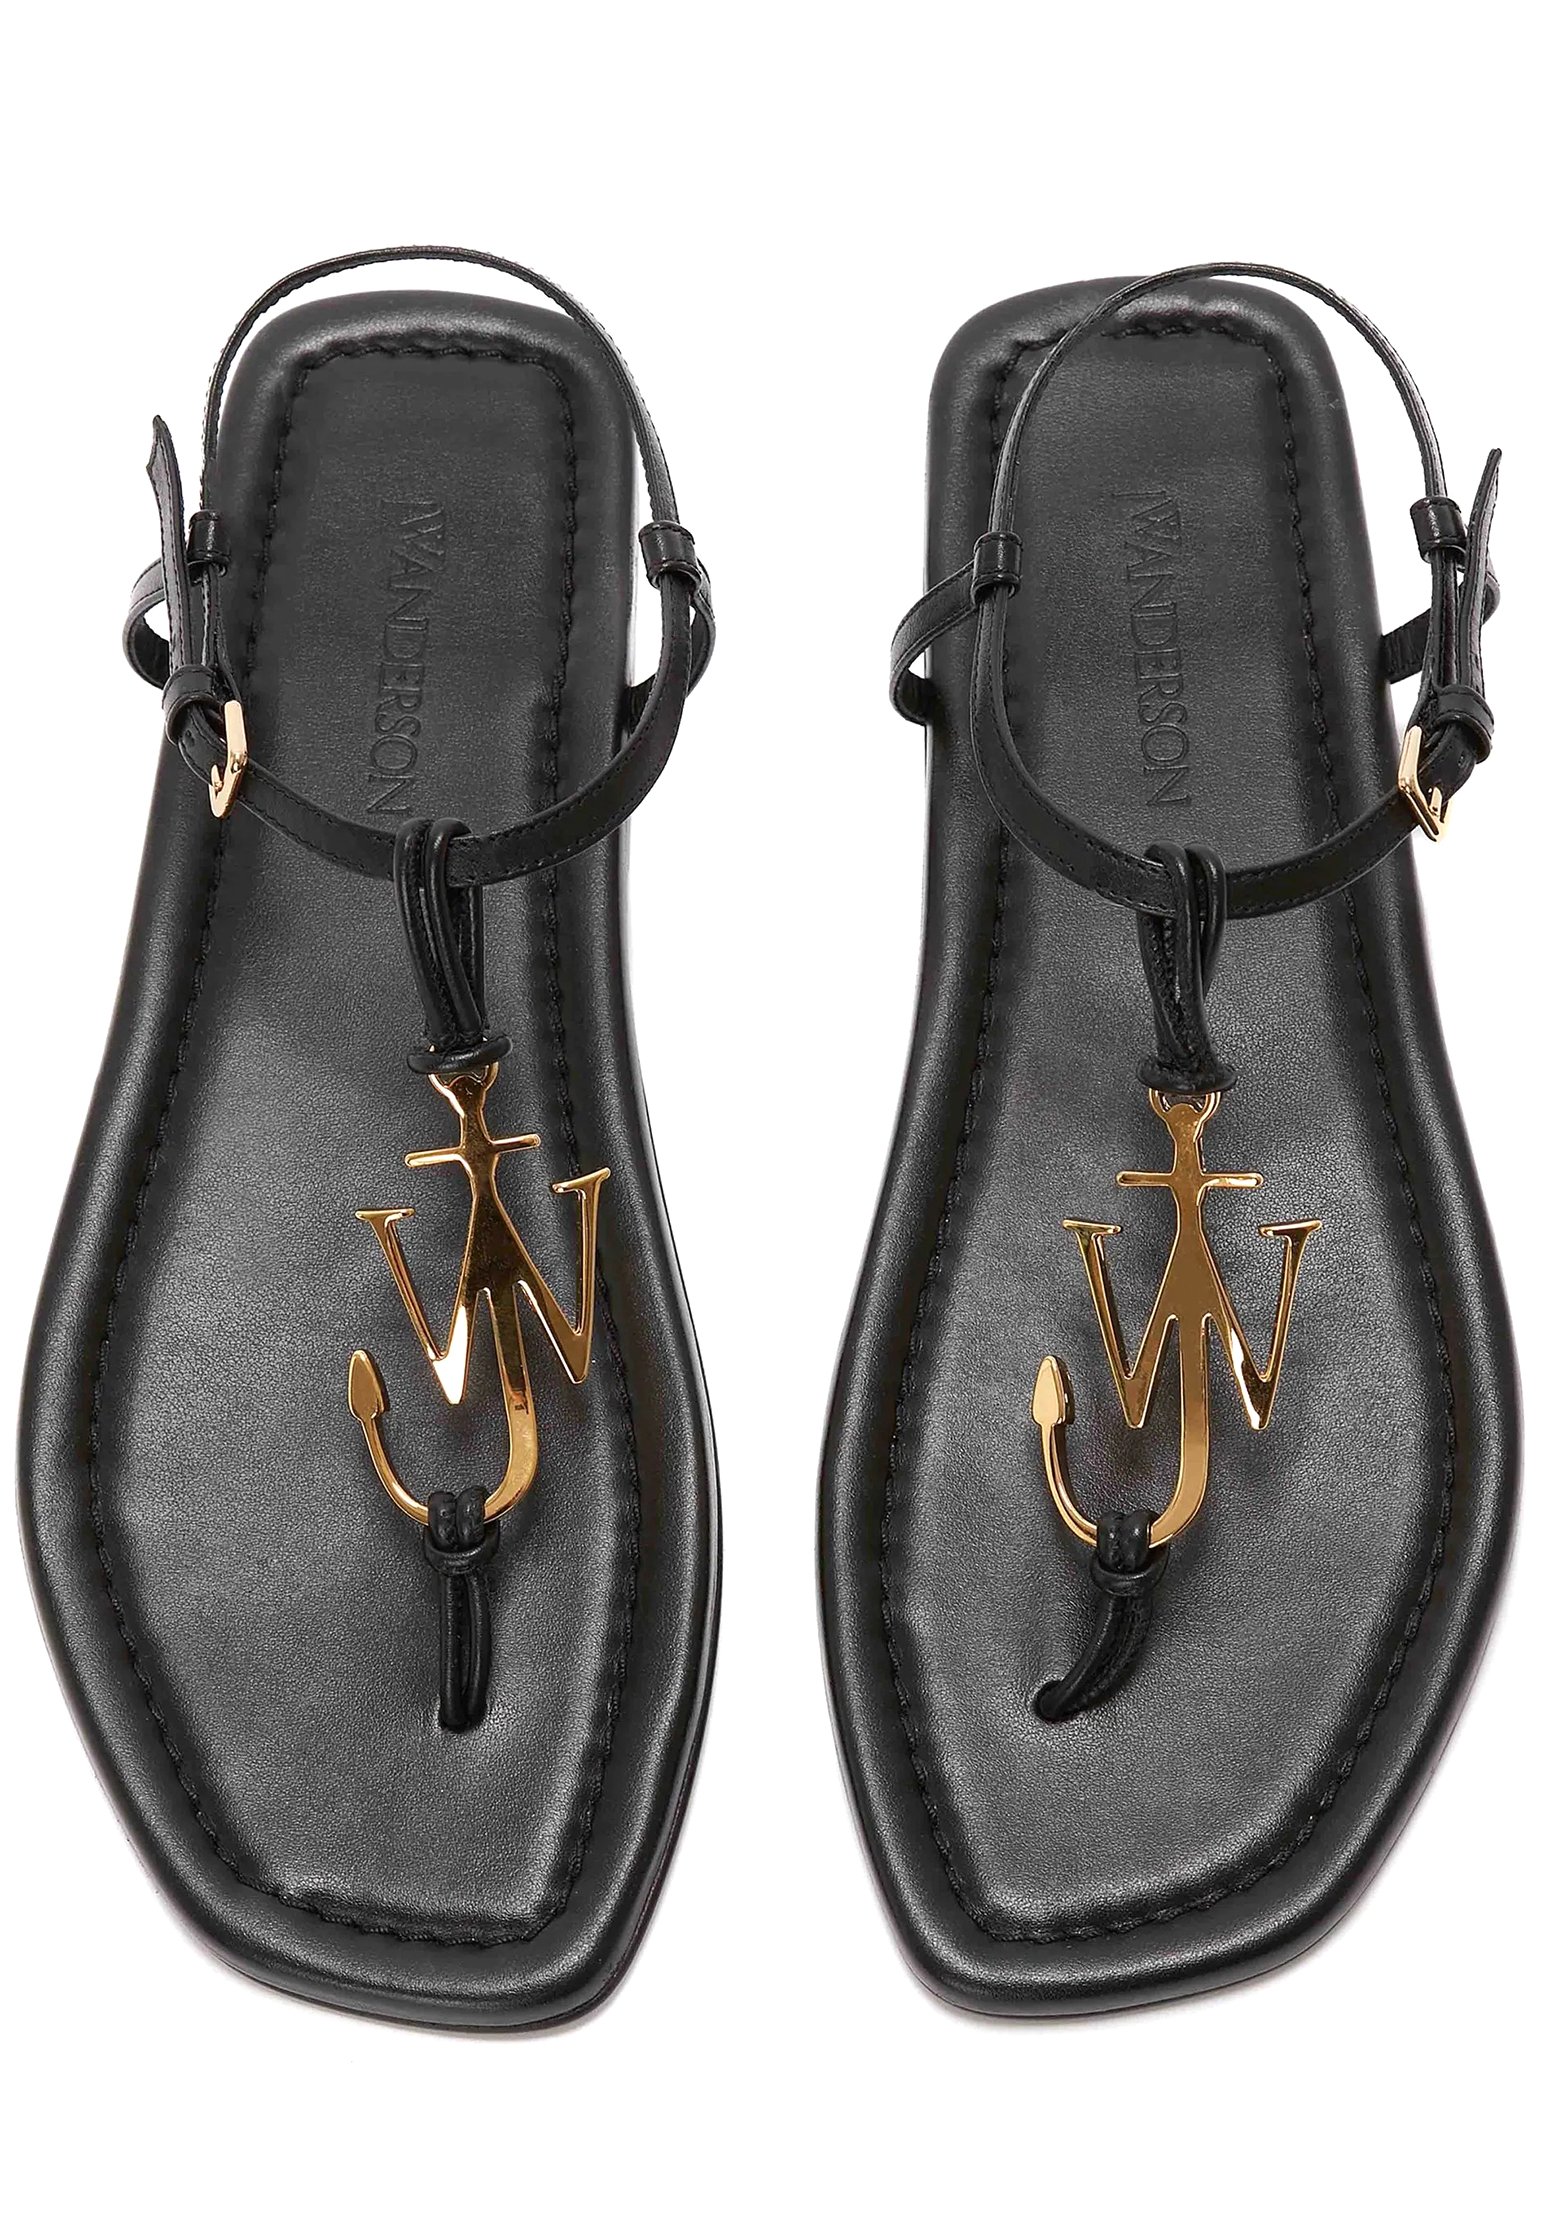 Sandals J.W. ANDERSON Color: black (Code: 735) in online store Allure